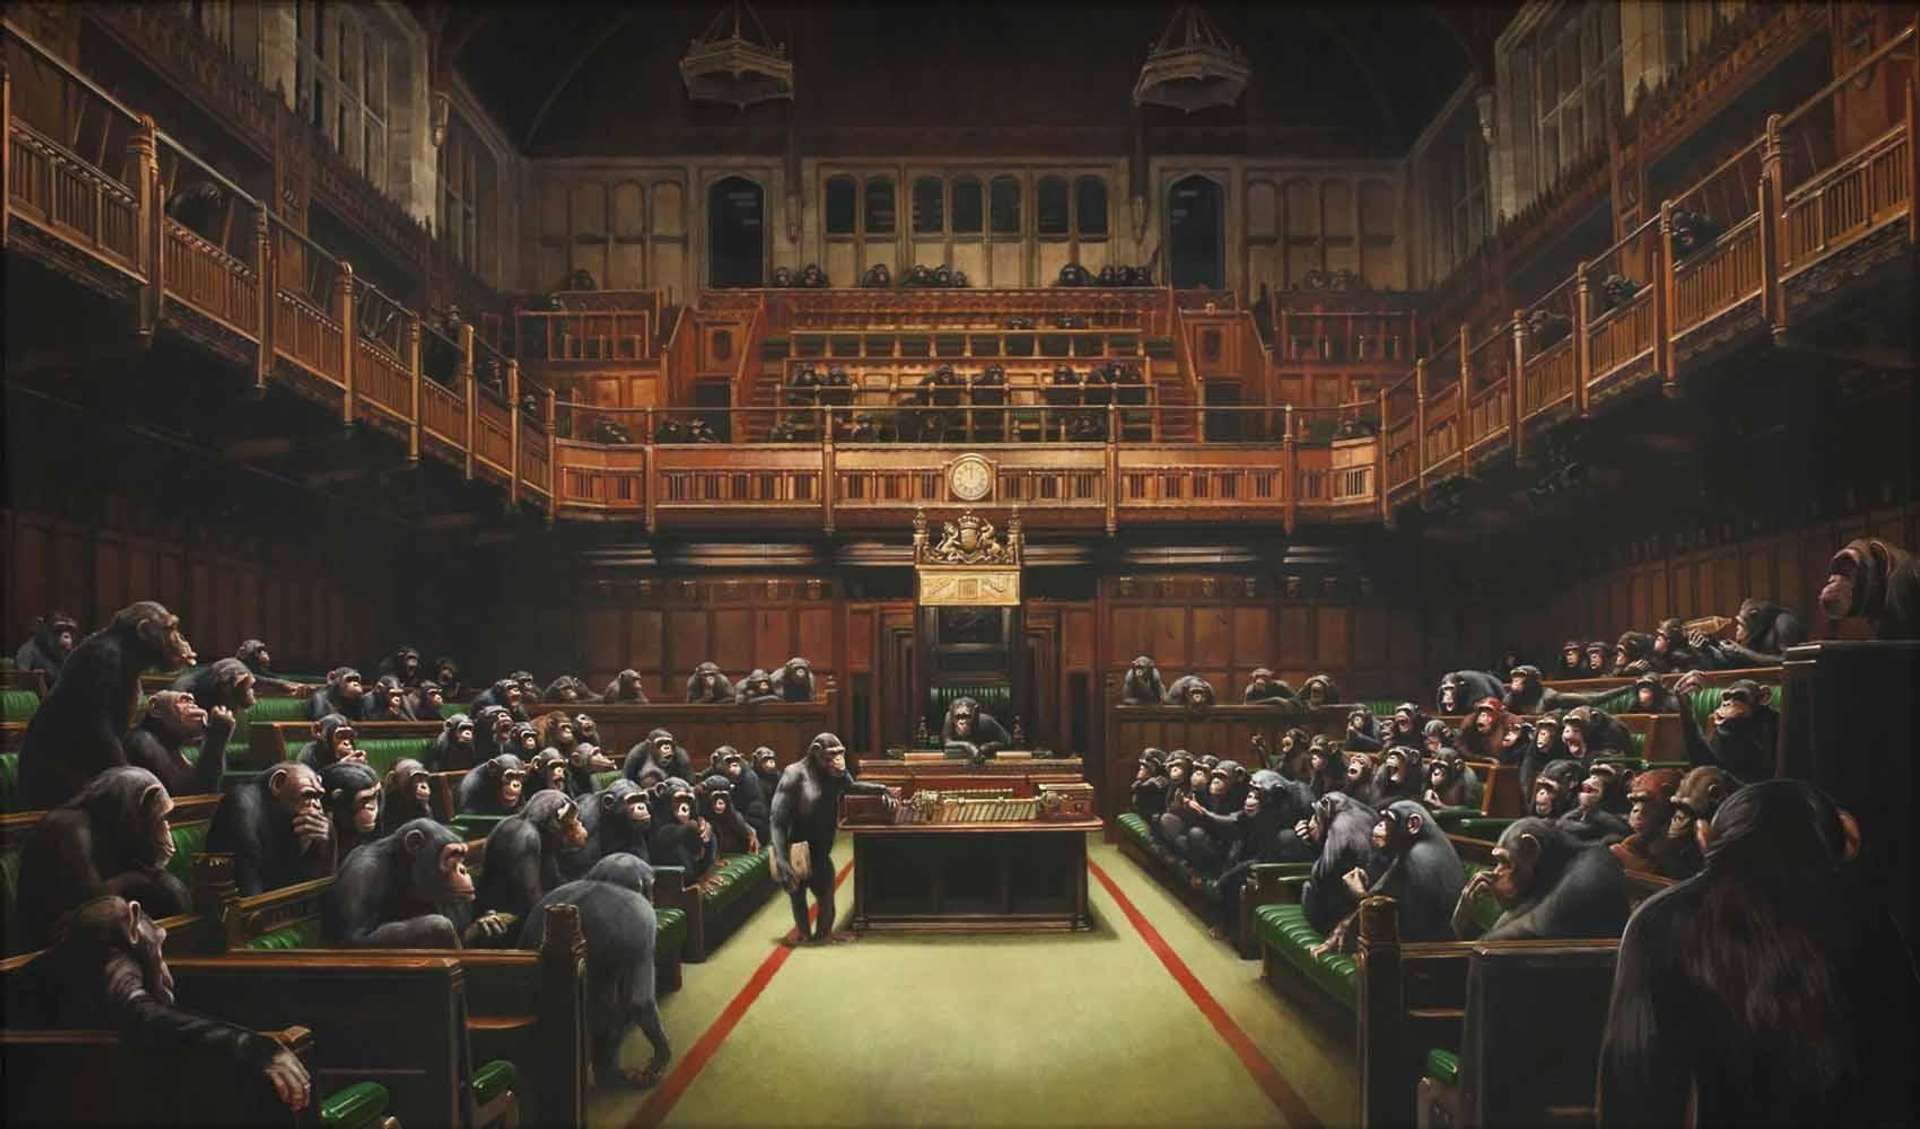 Devolved Parliament by Banksy